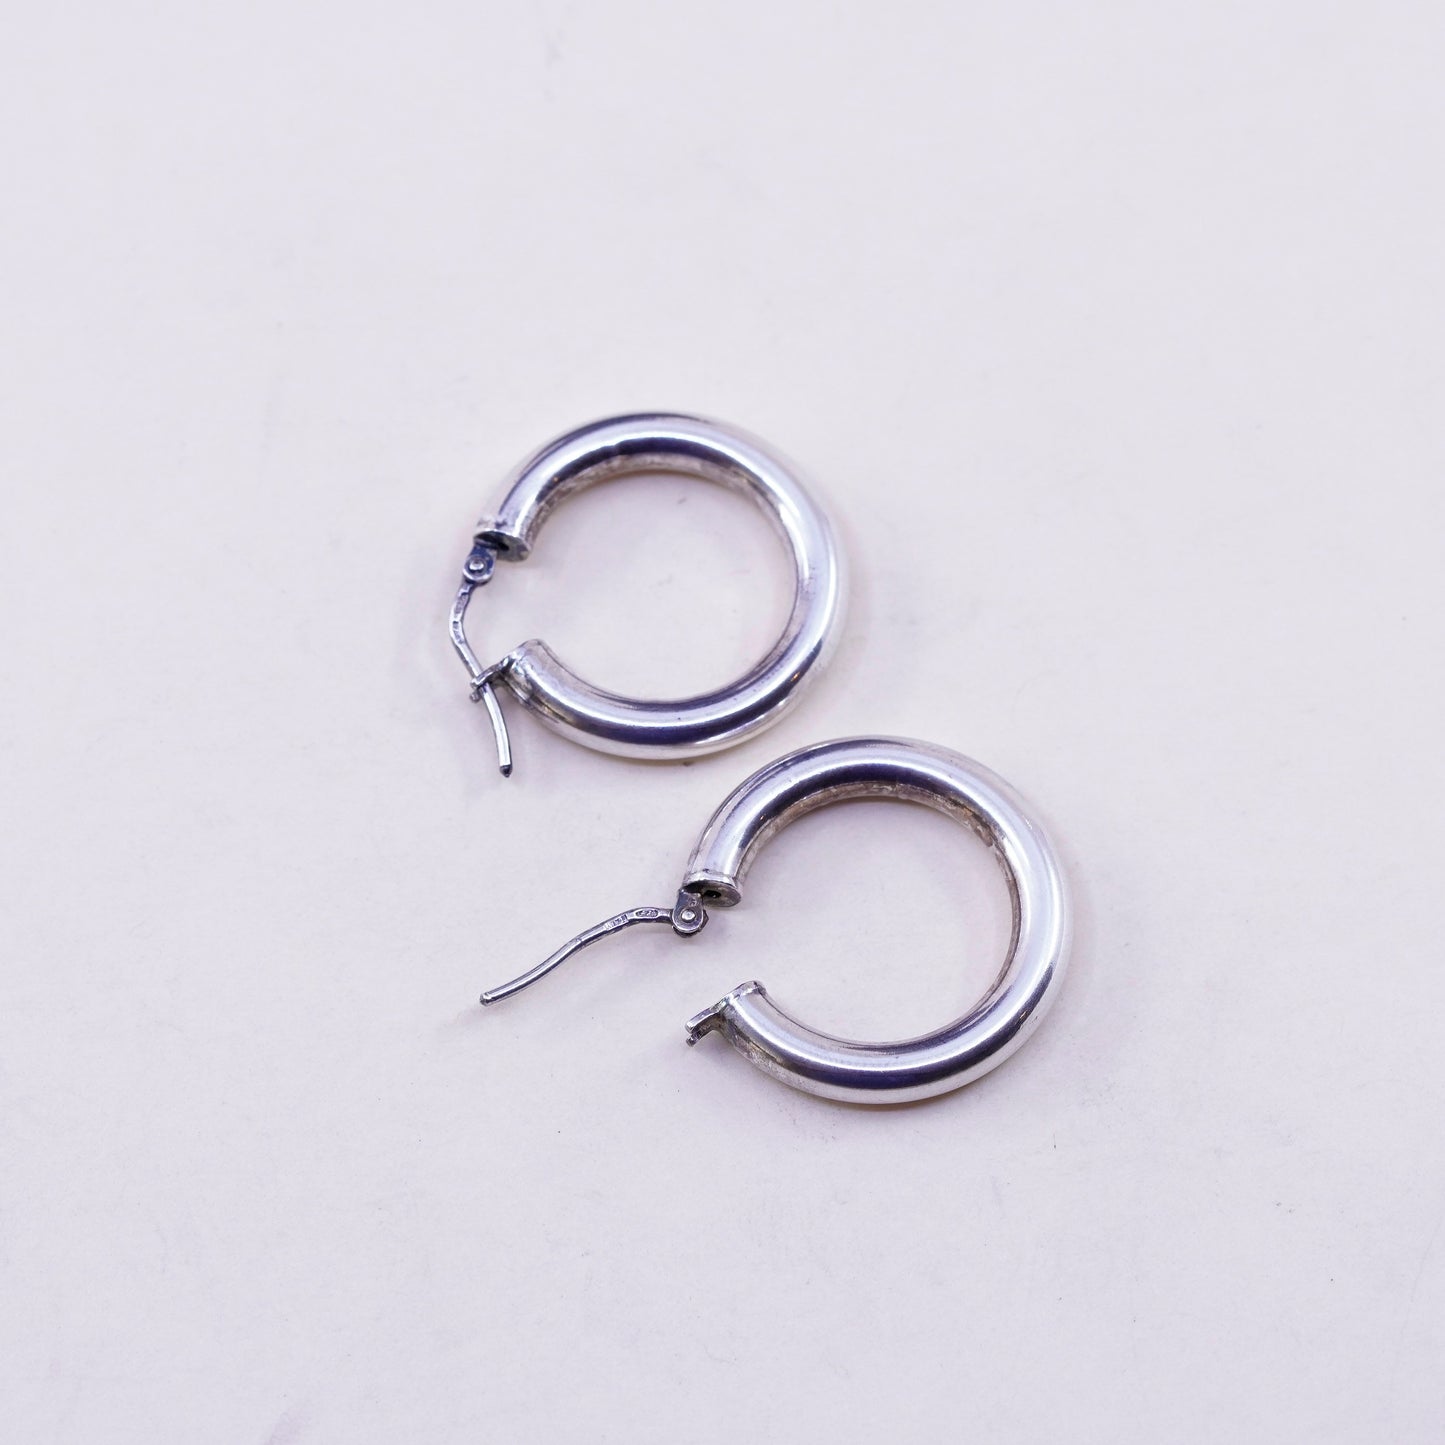 1” Vintage sterling 925 silver earrings, fashion minimalist primitive hoops